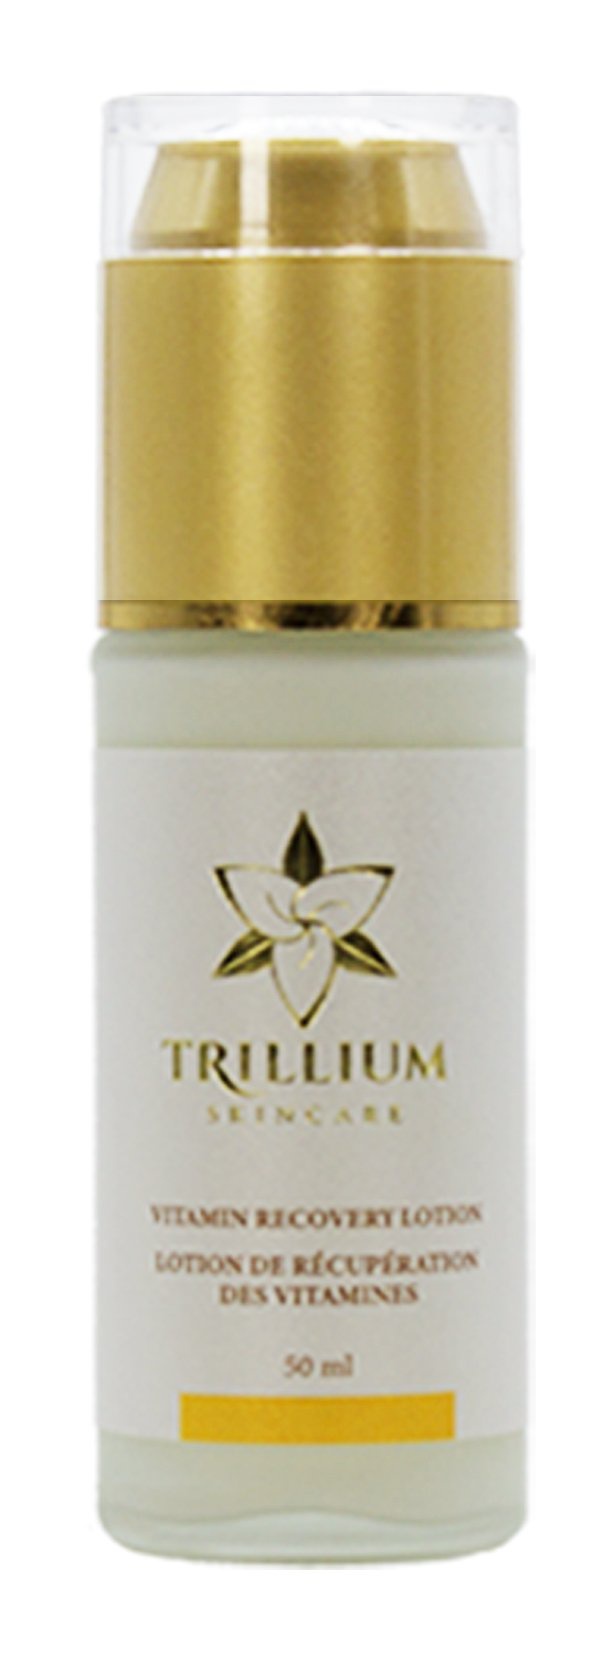 Trillium Skincare Vitamin Recovery Lotion